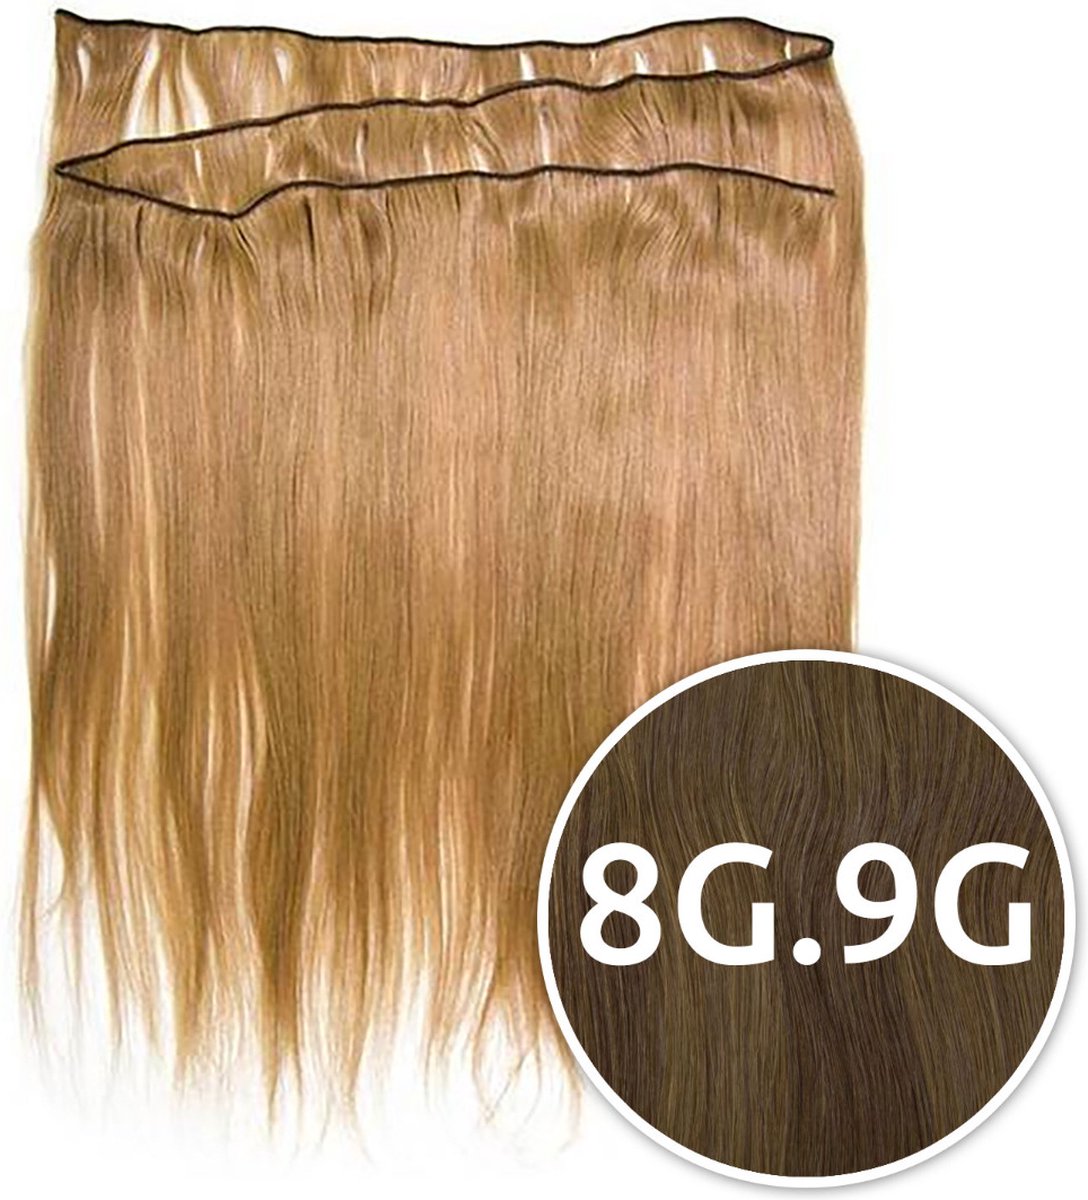 Balmain Hair Professional - Backstage Weft Human Hair - 8A.9A - Blond